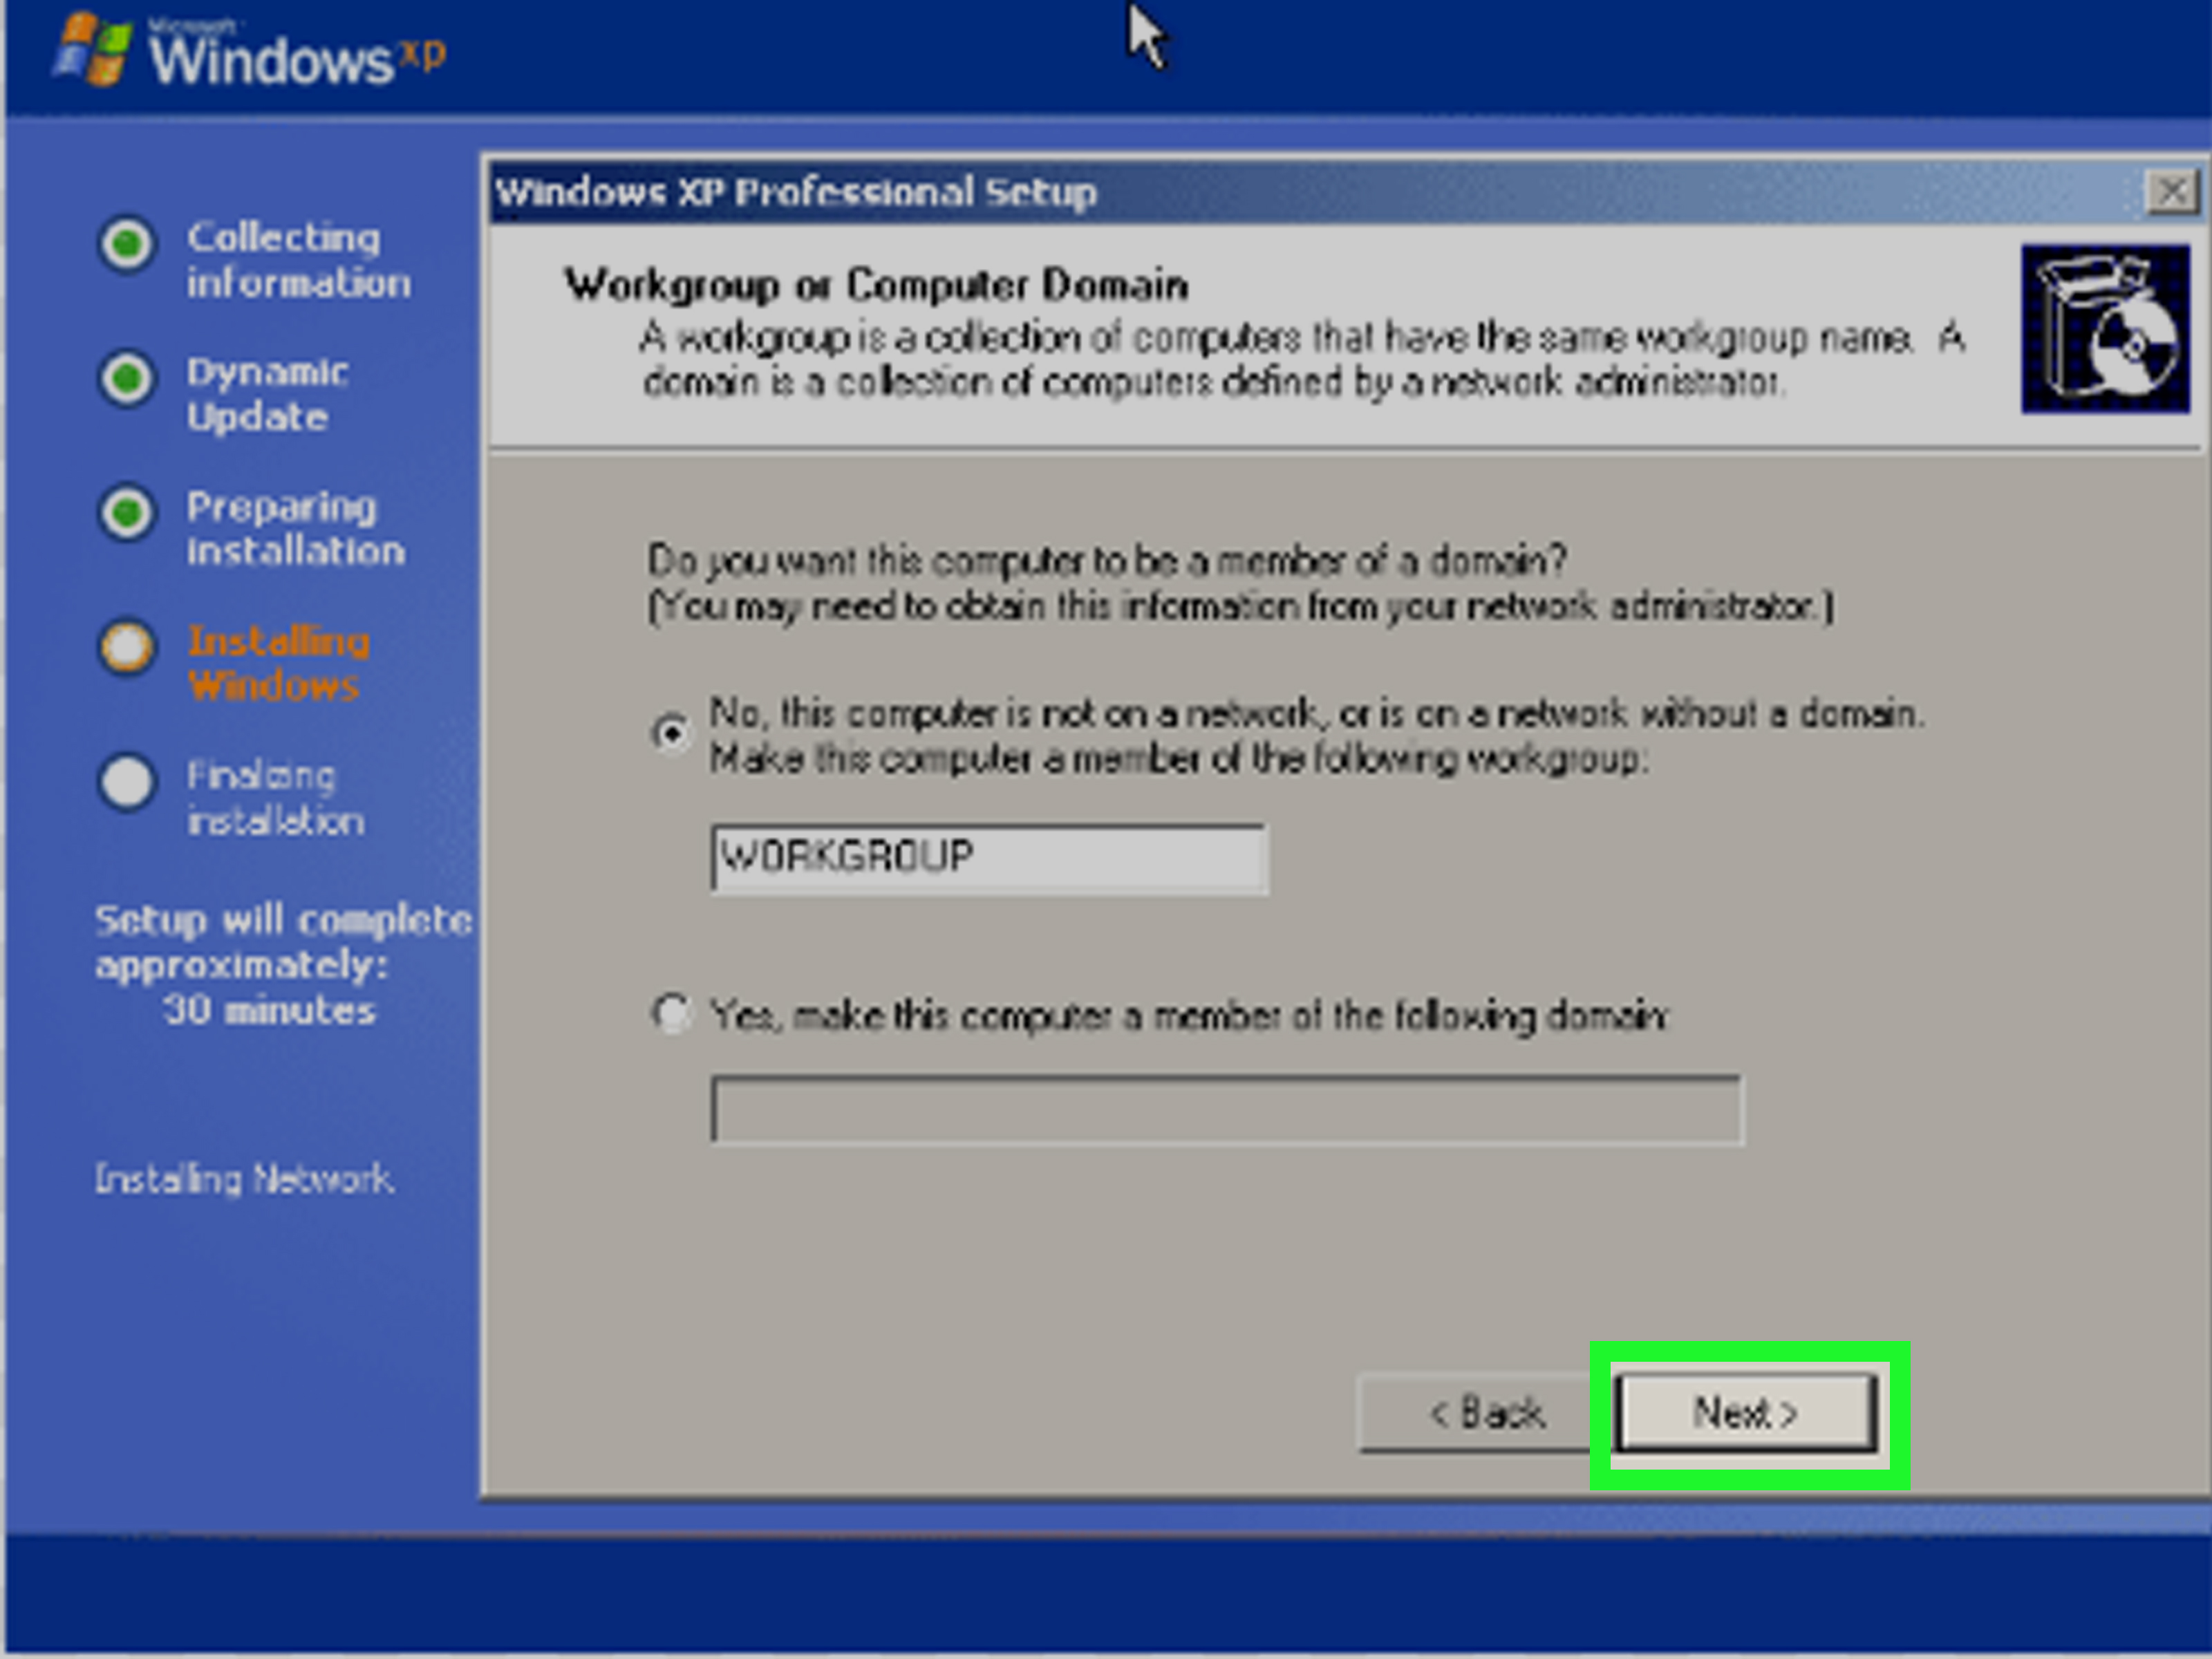 si vuelve a instalar Windows XP, pierde